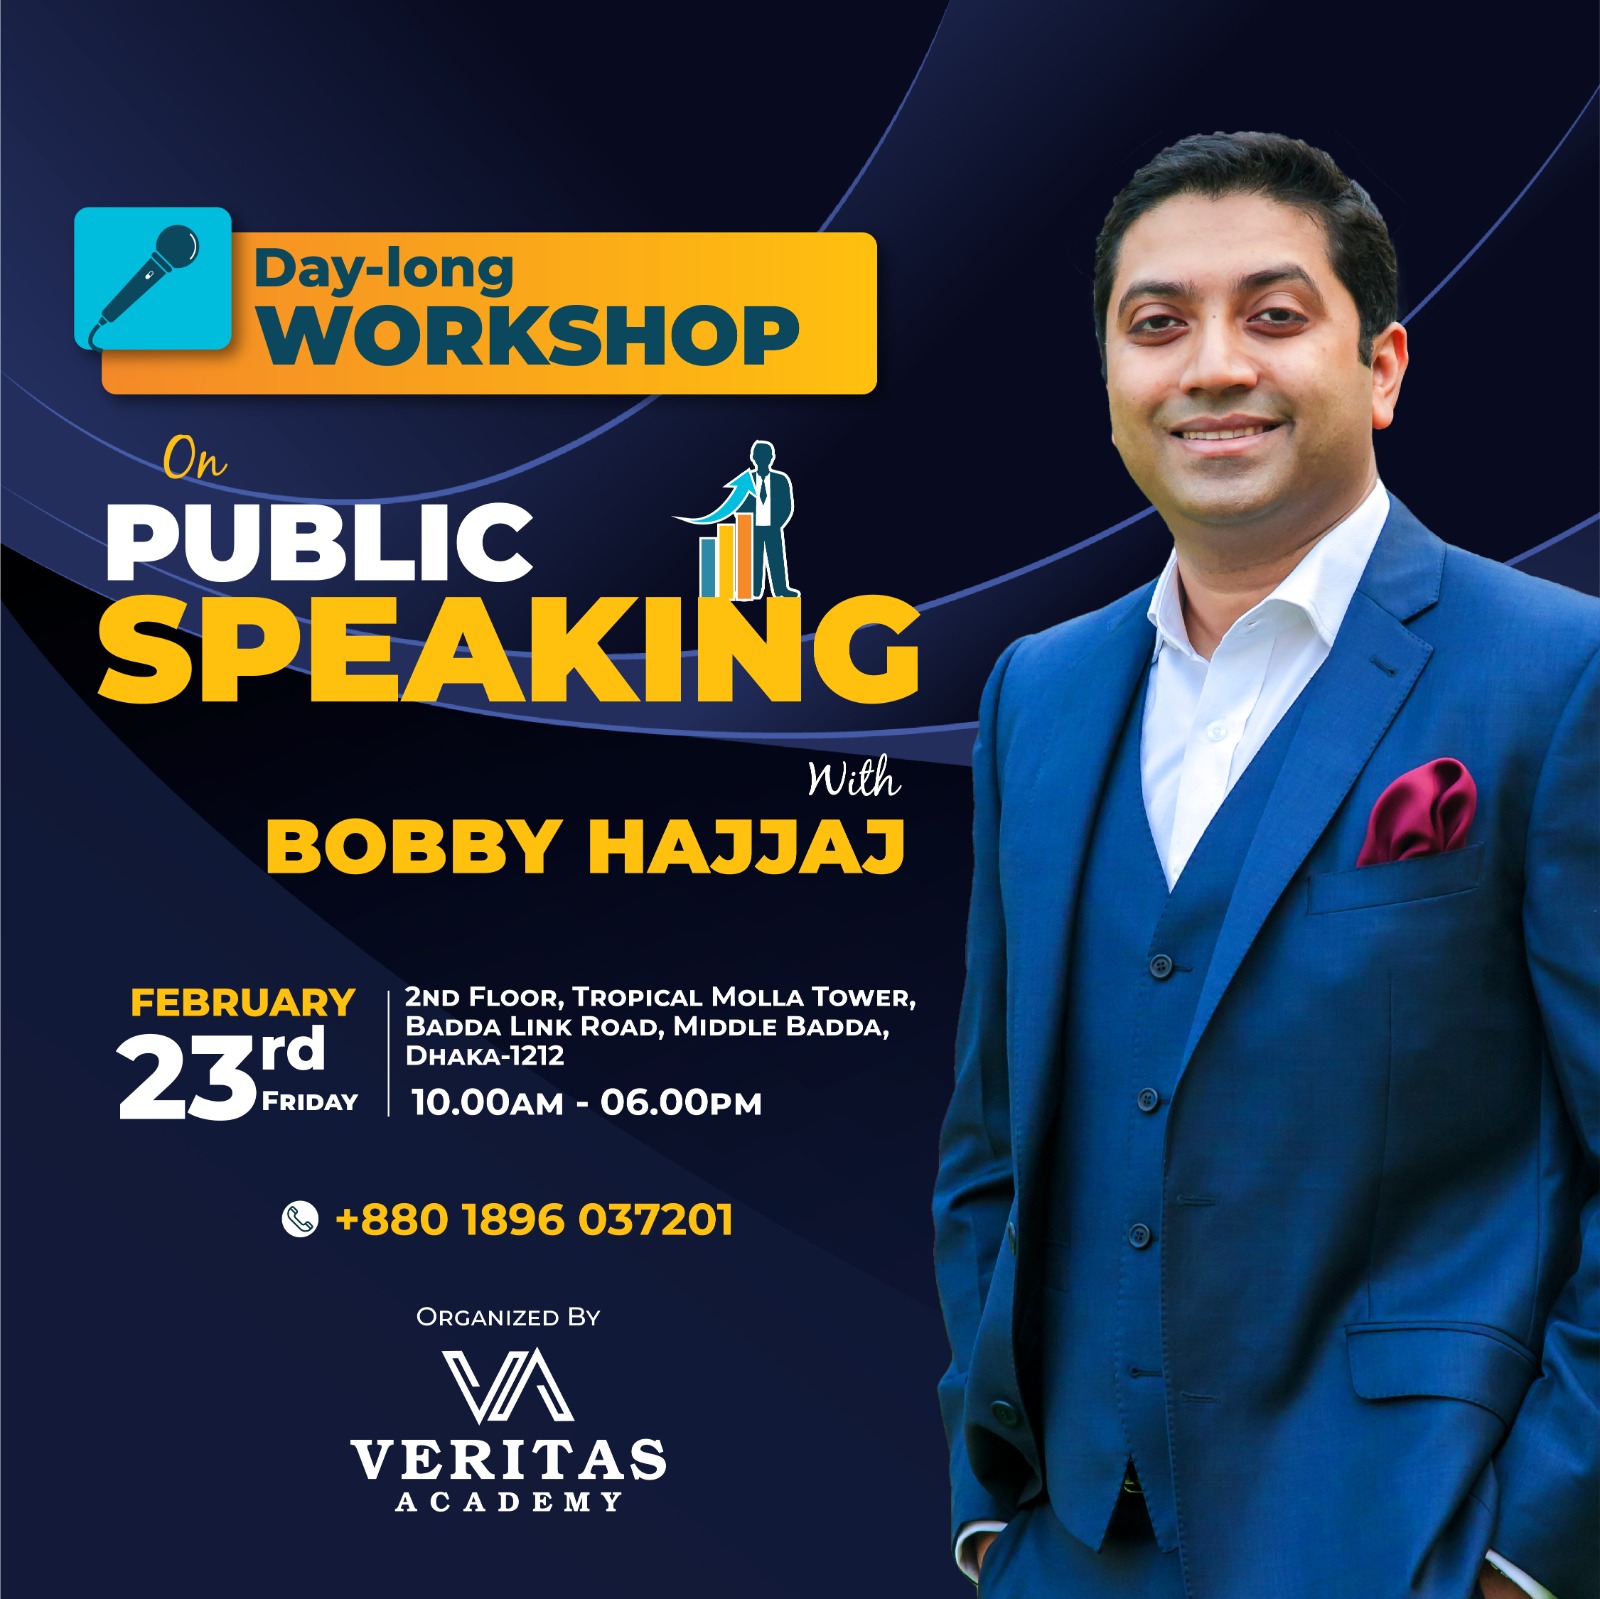 Day-long Workshop on Public Speaking with Bobby Hajjaj